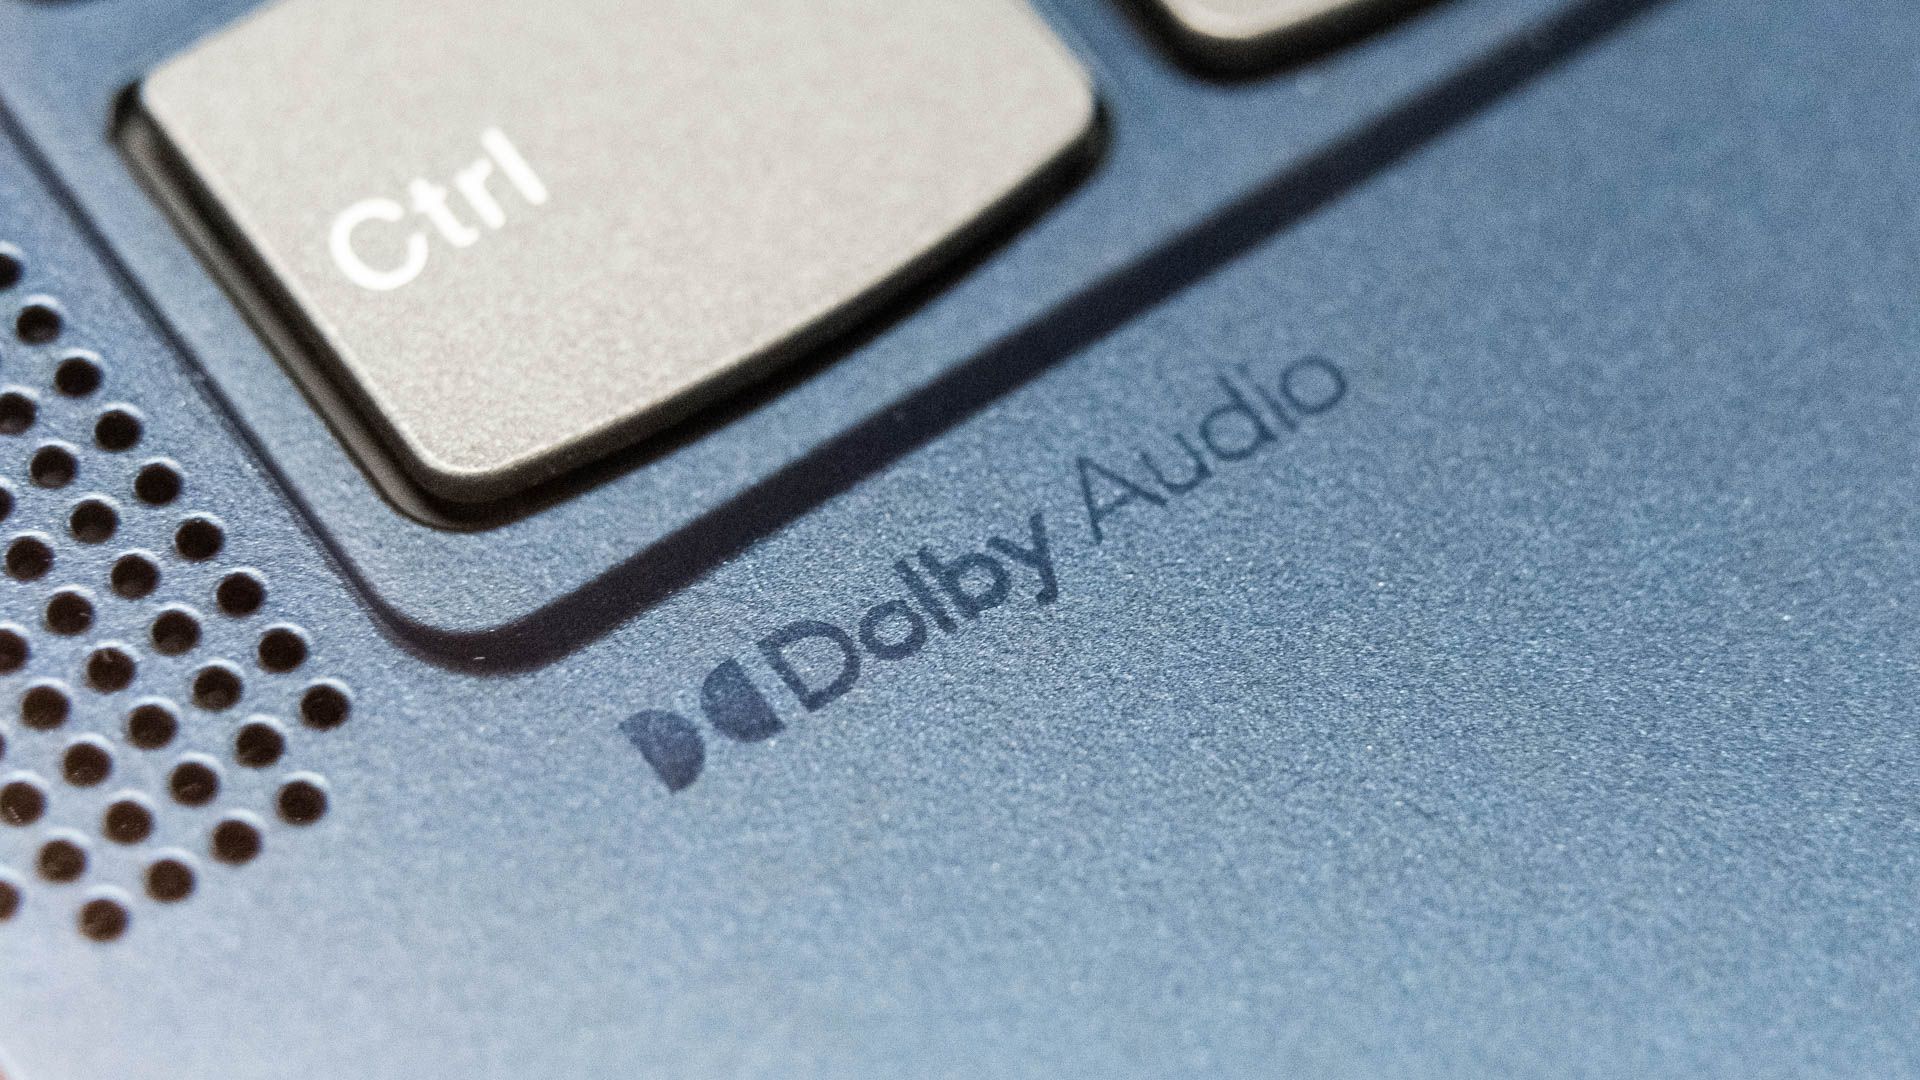 Dolby Audio branding on the Lenovo Flex 5i 14